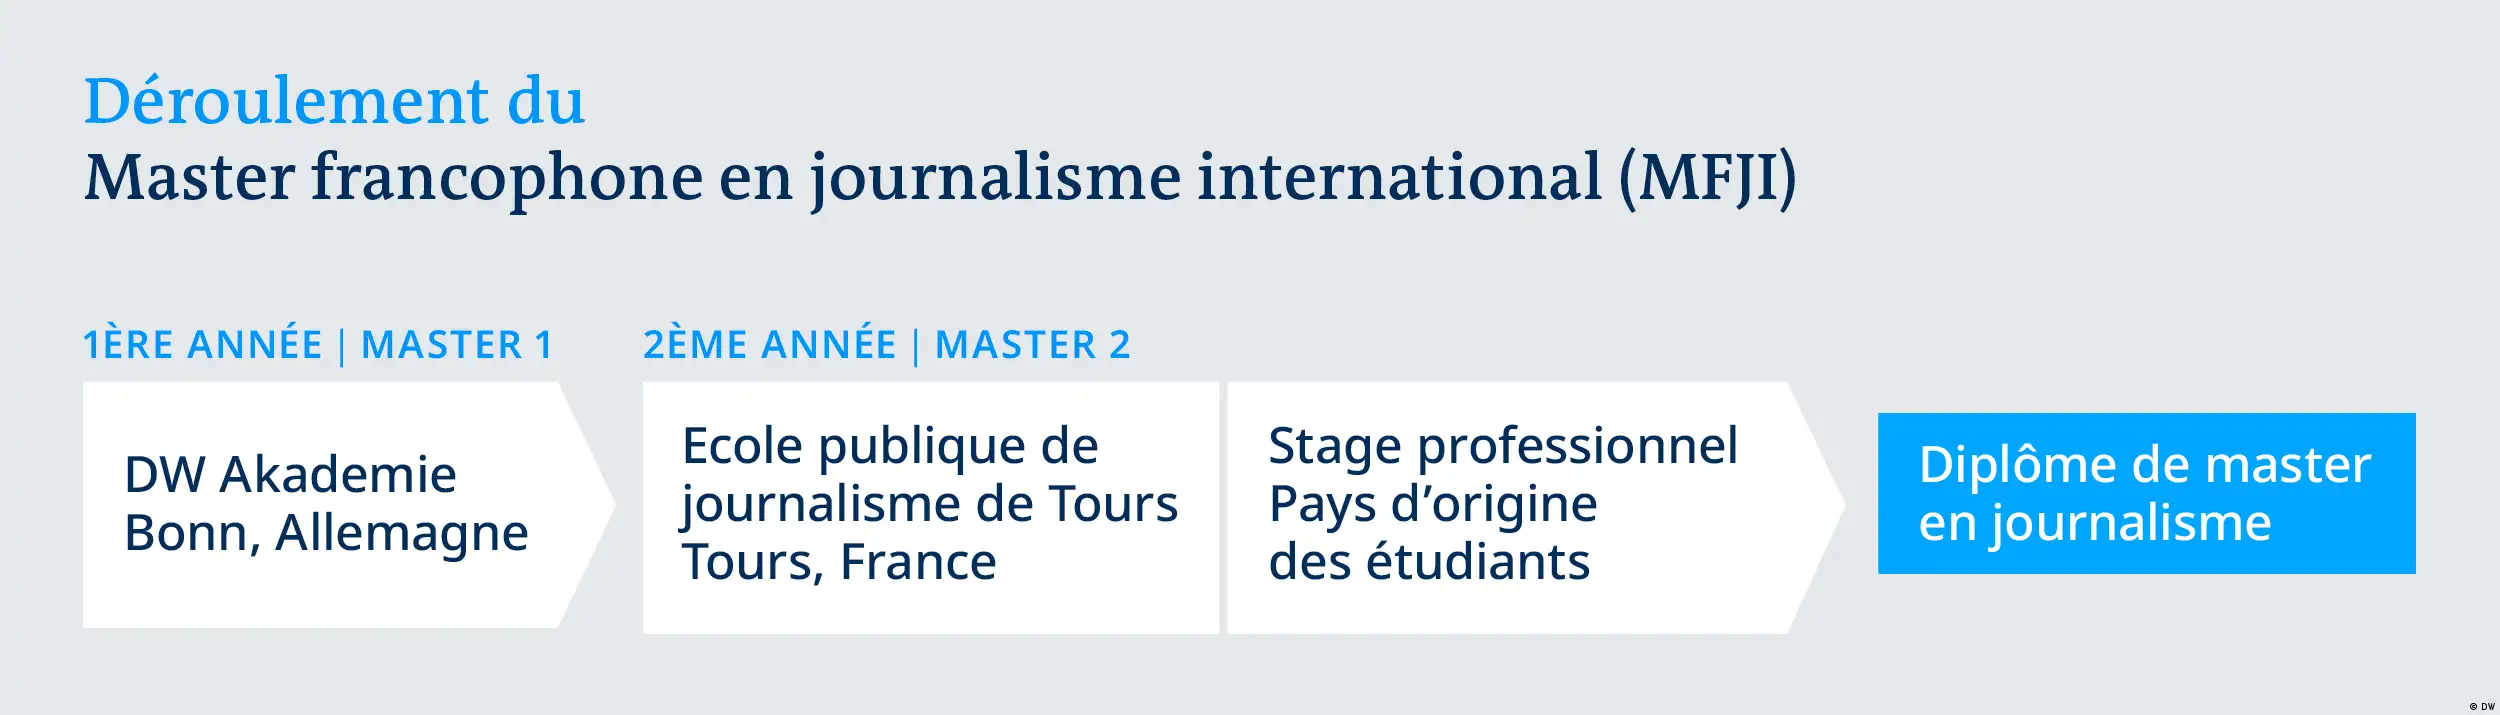 Le nouveau cursus DW/EPJT : Master francophone en journalisme international (MFJI)